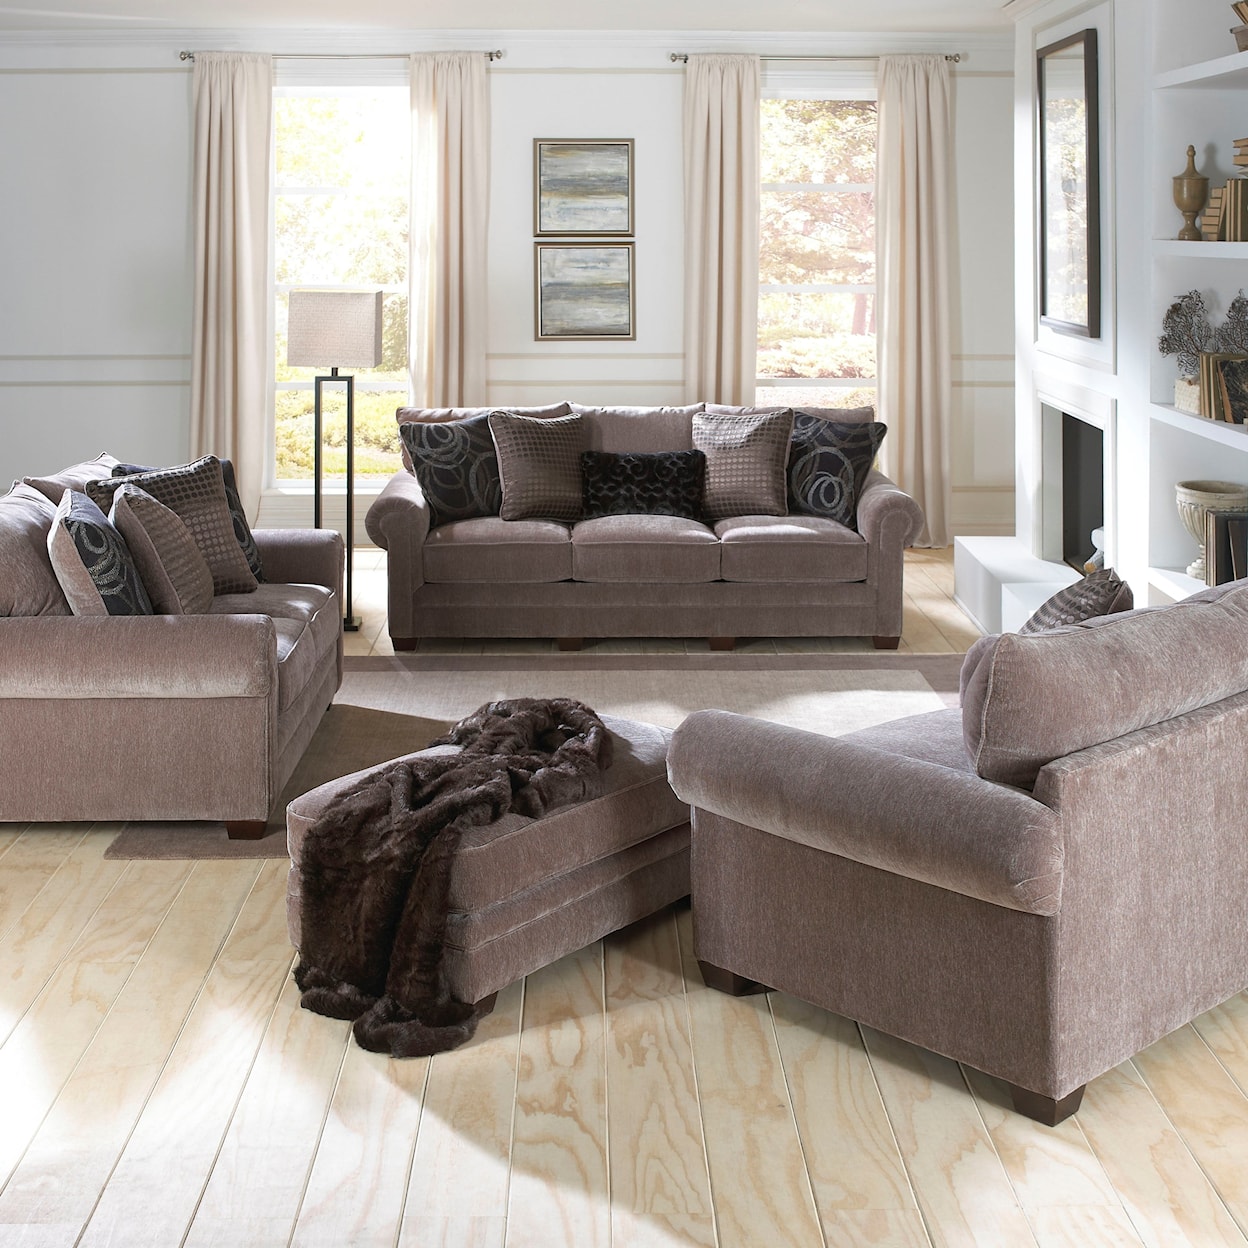 Jackson Furniture 4341 Austin Sofa